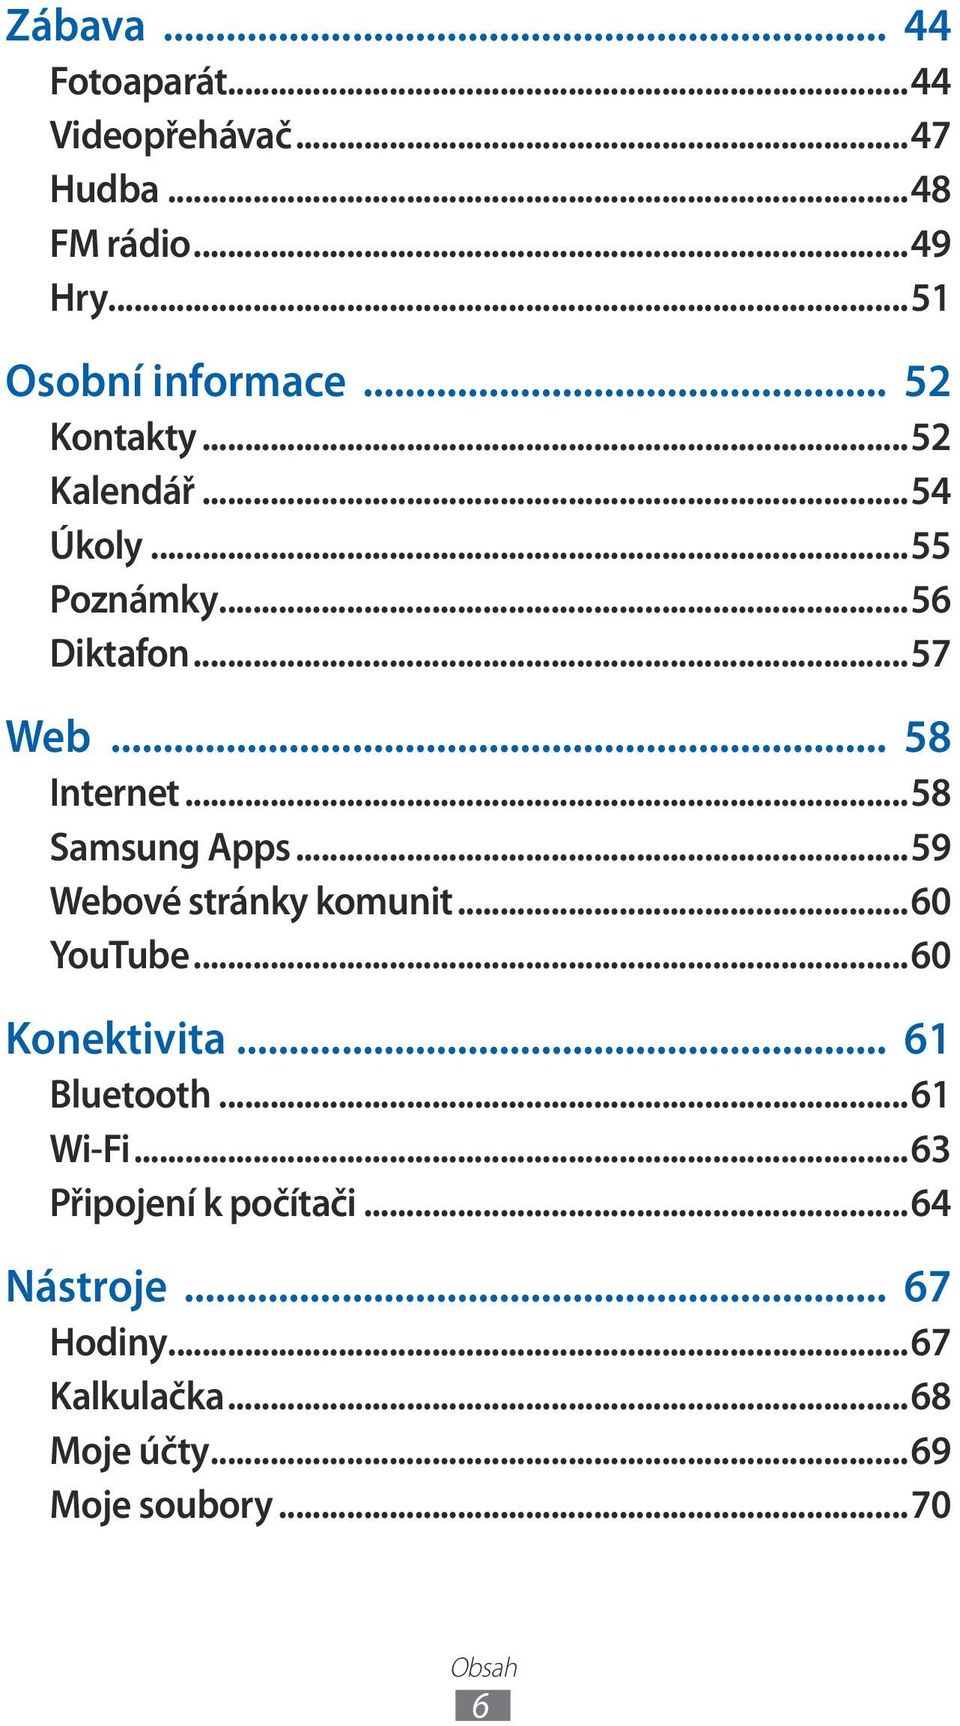 ..58 Samsung Apps...59 Webové stránky komunit...60 YouTube...60 Konektivita... 61 Bluetooth...61 Wi-Fi.